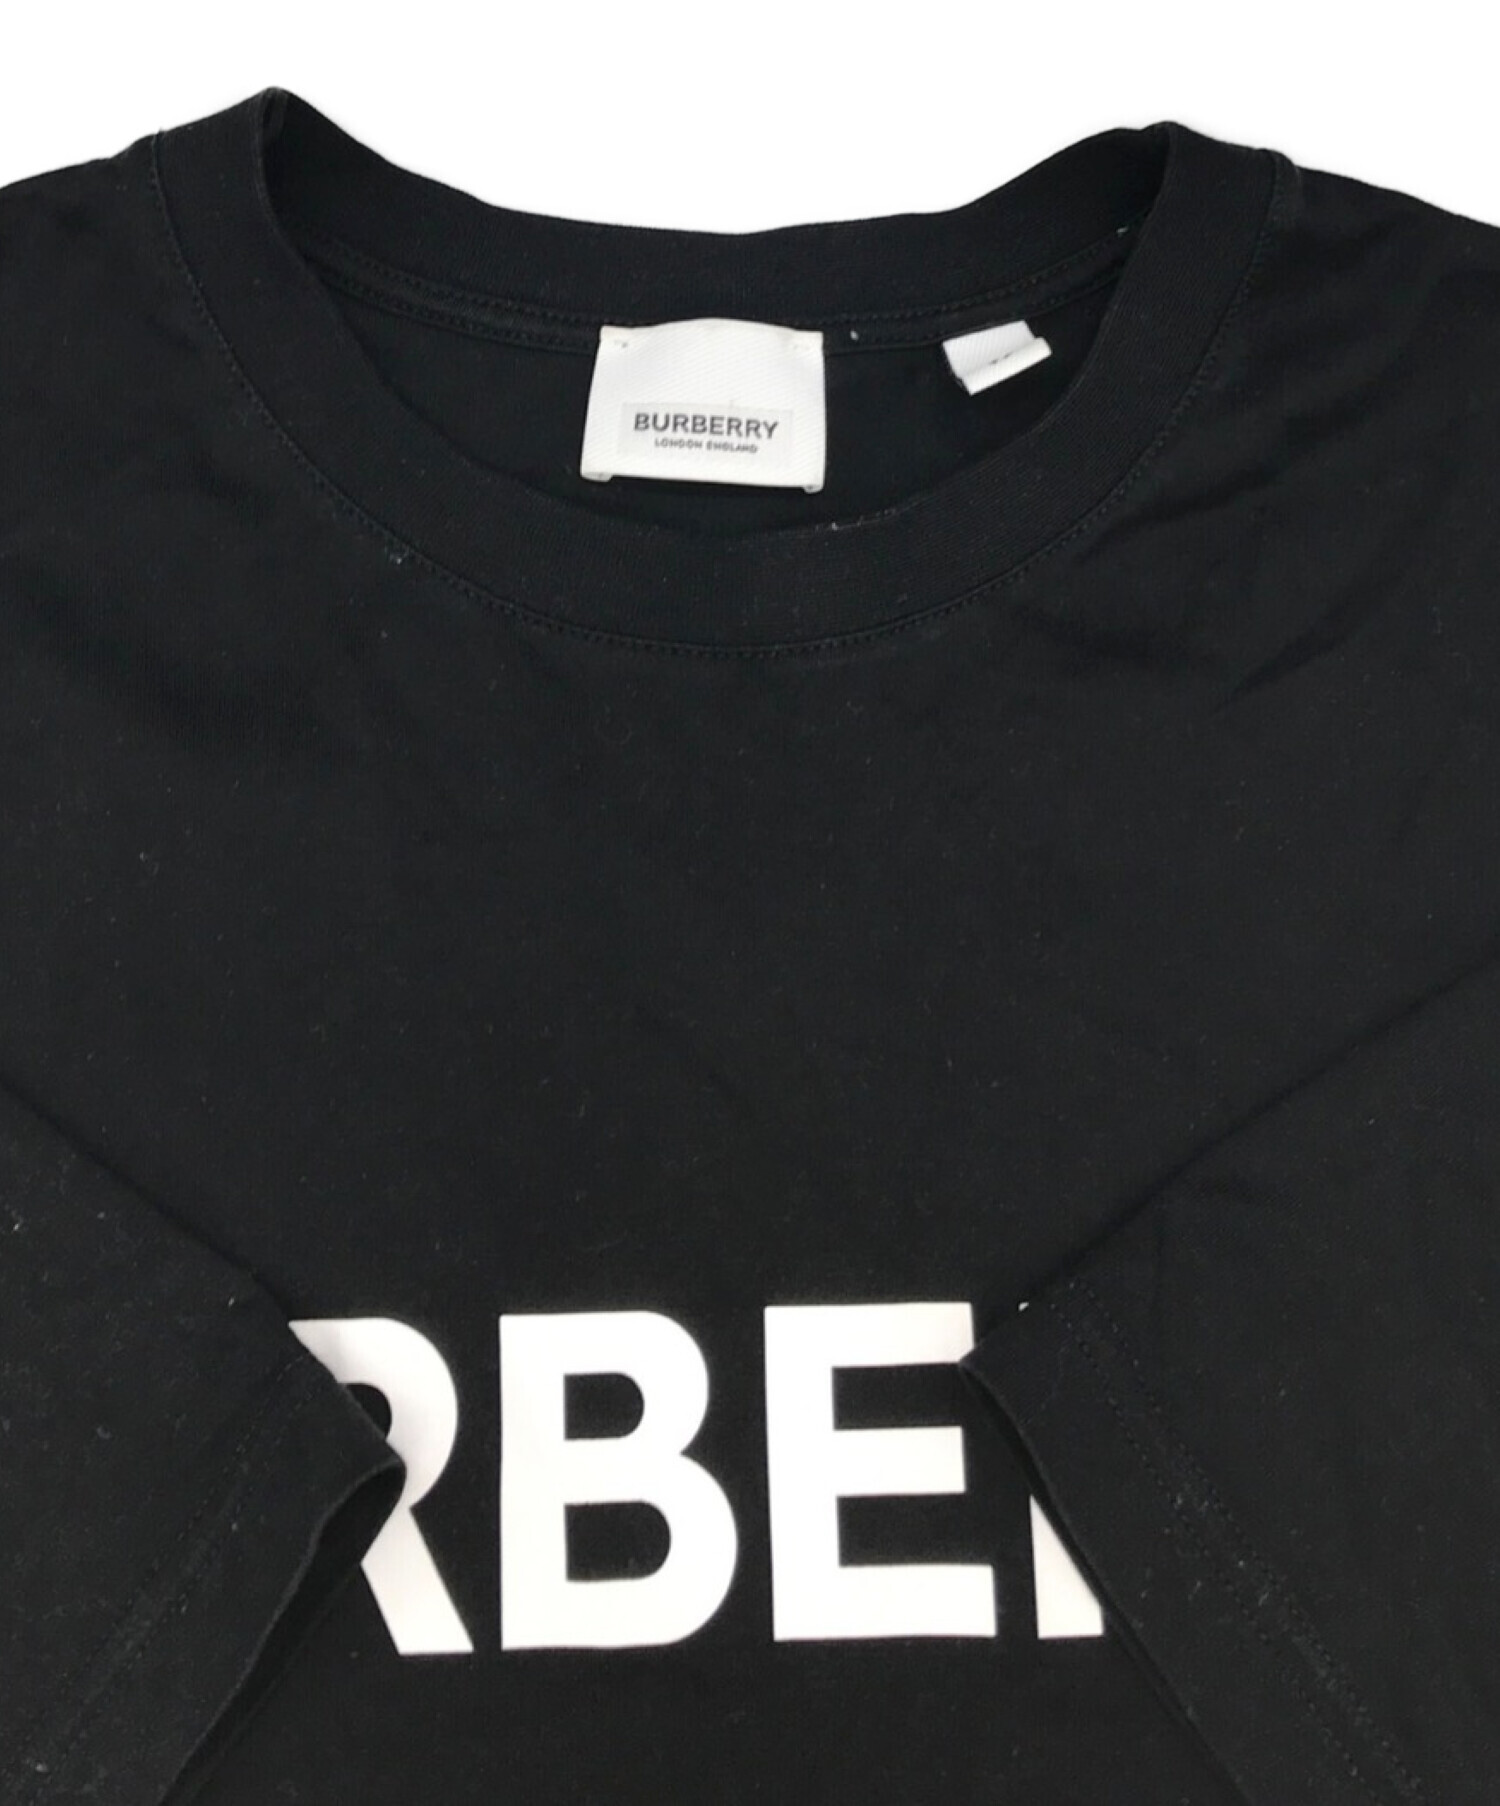 BURBERRY (バーバリー) ホースフェリープリント オーバーサイズ コットンTシャツ ブラック サイズ:XS